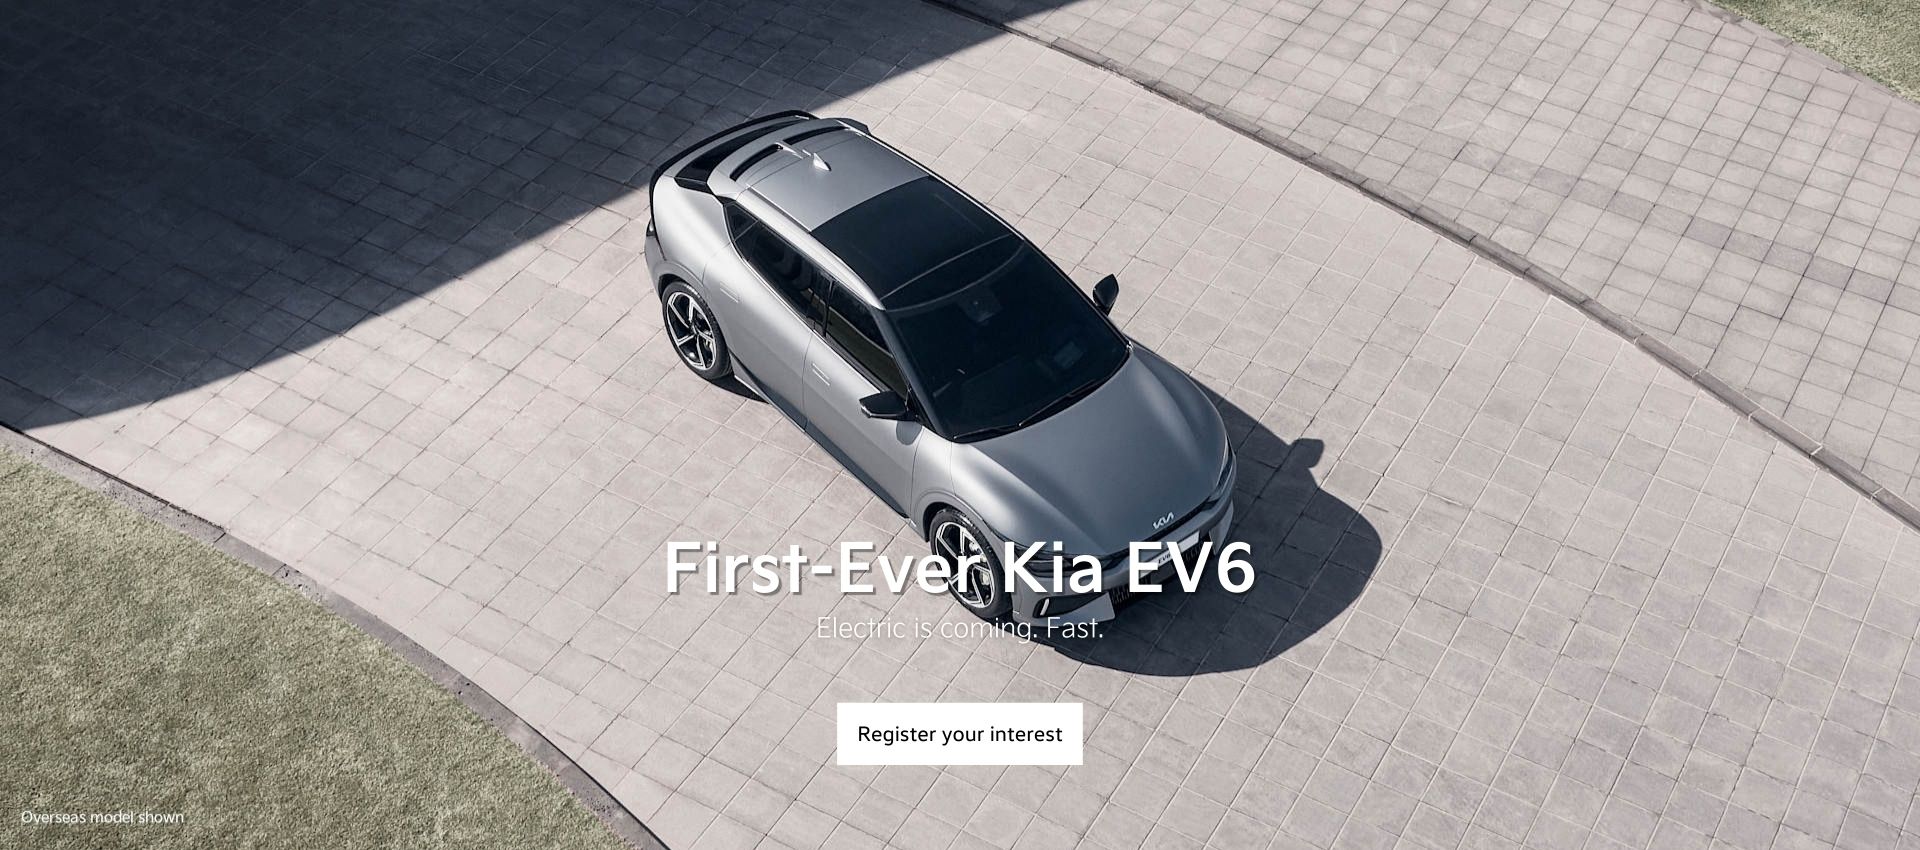 First-Ever Kia EV6